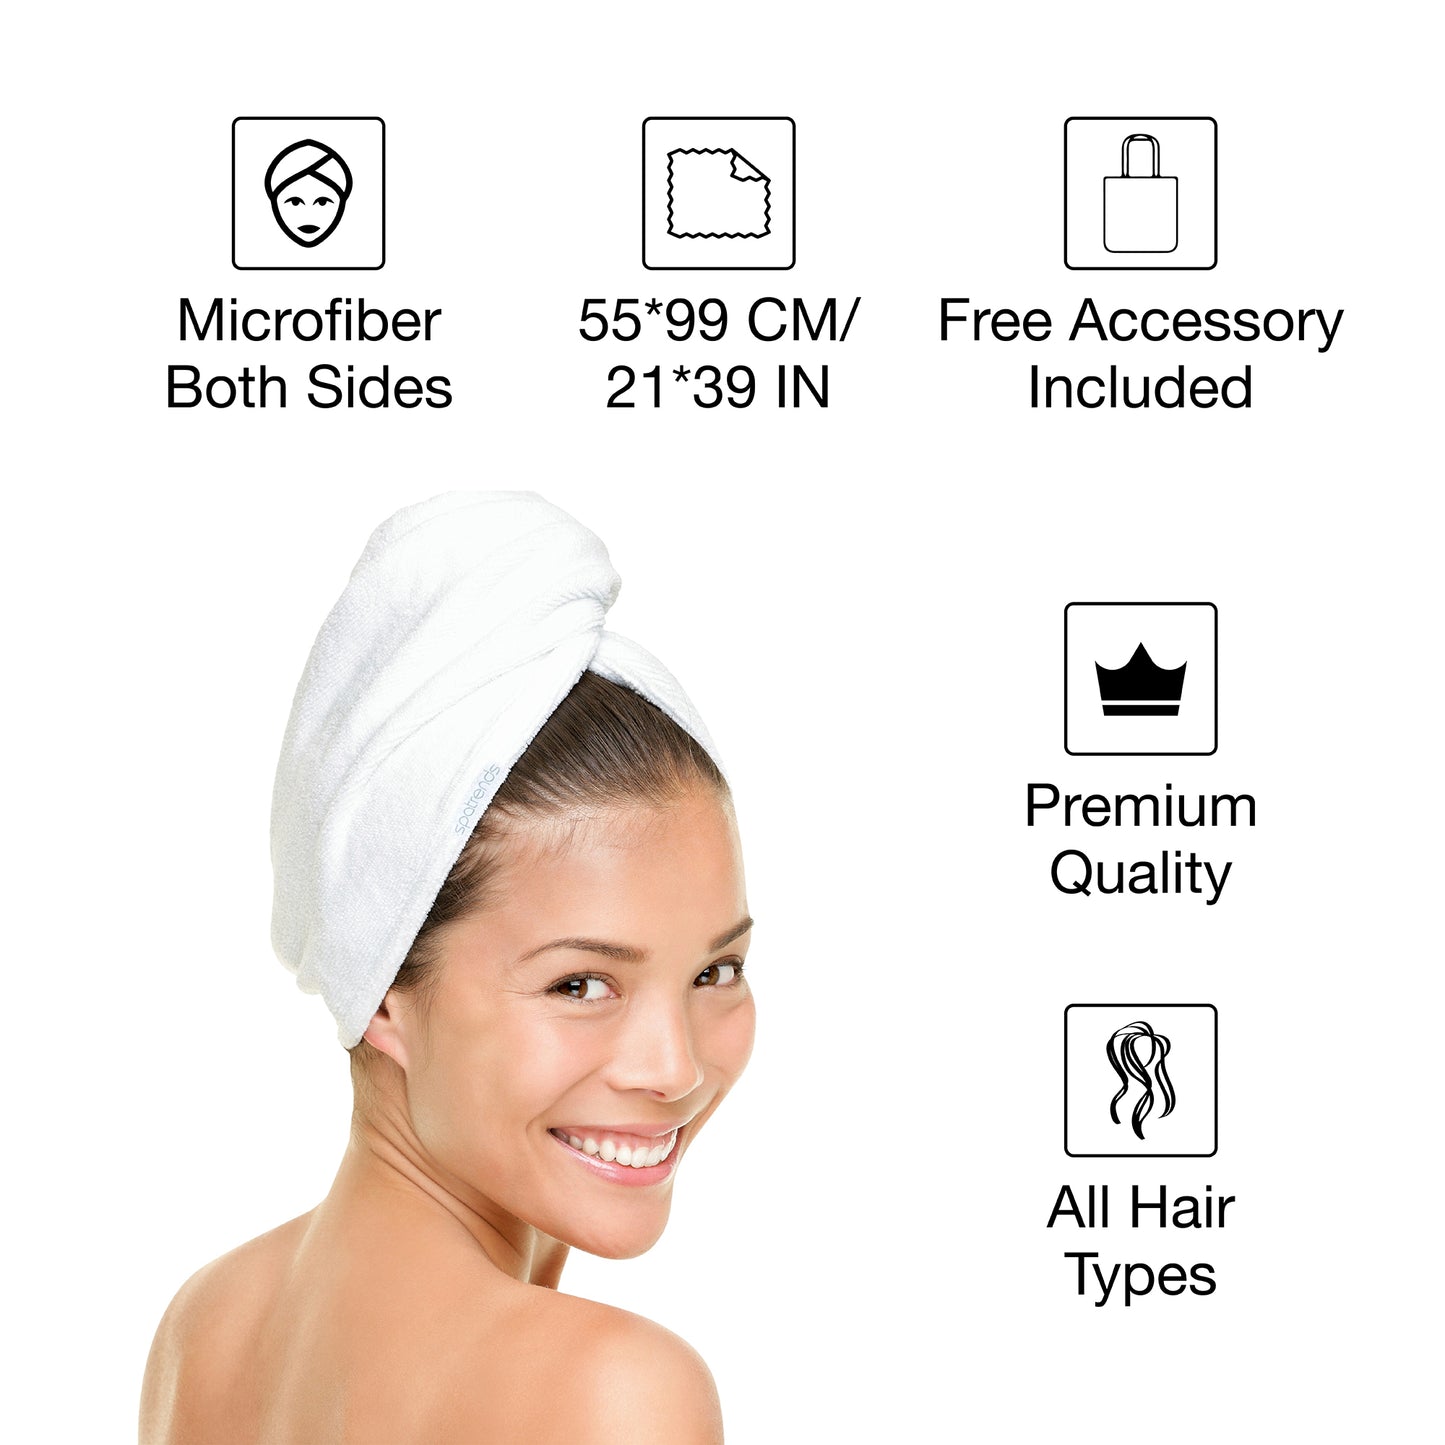 Hairworthy Hairembrace Microfiber hair towel